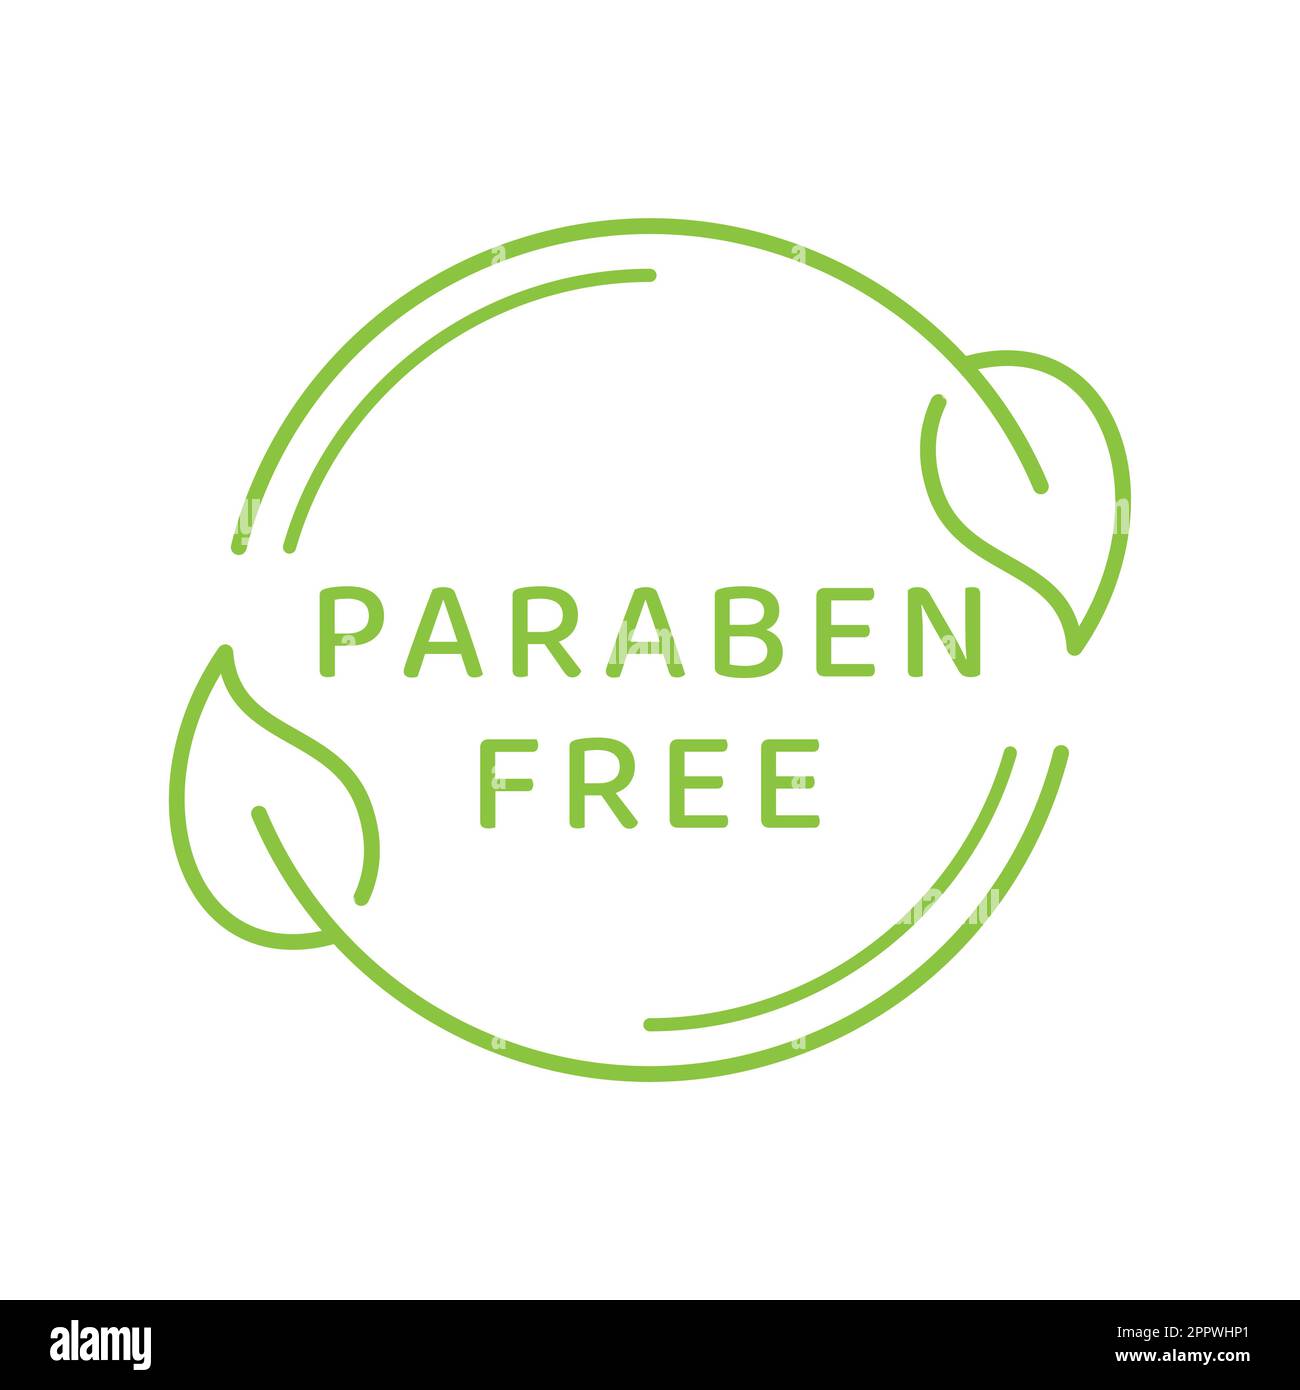 Paraben free vector label set Stock Vector